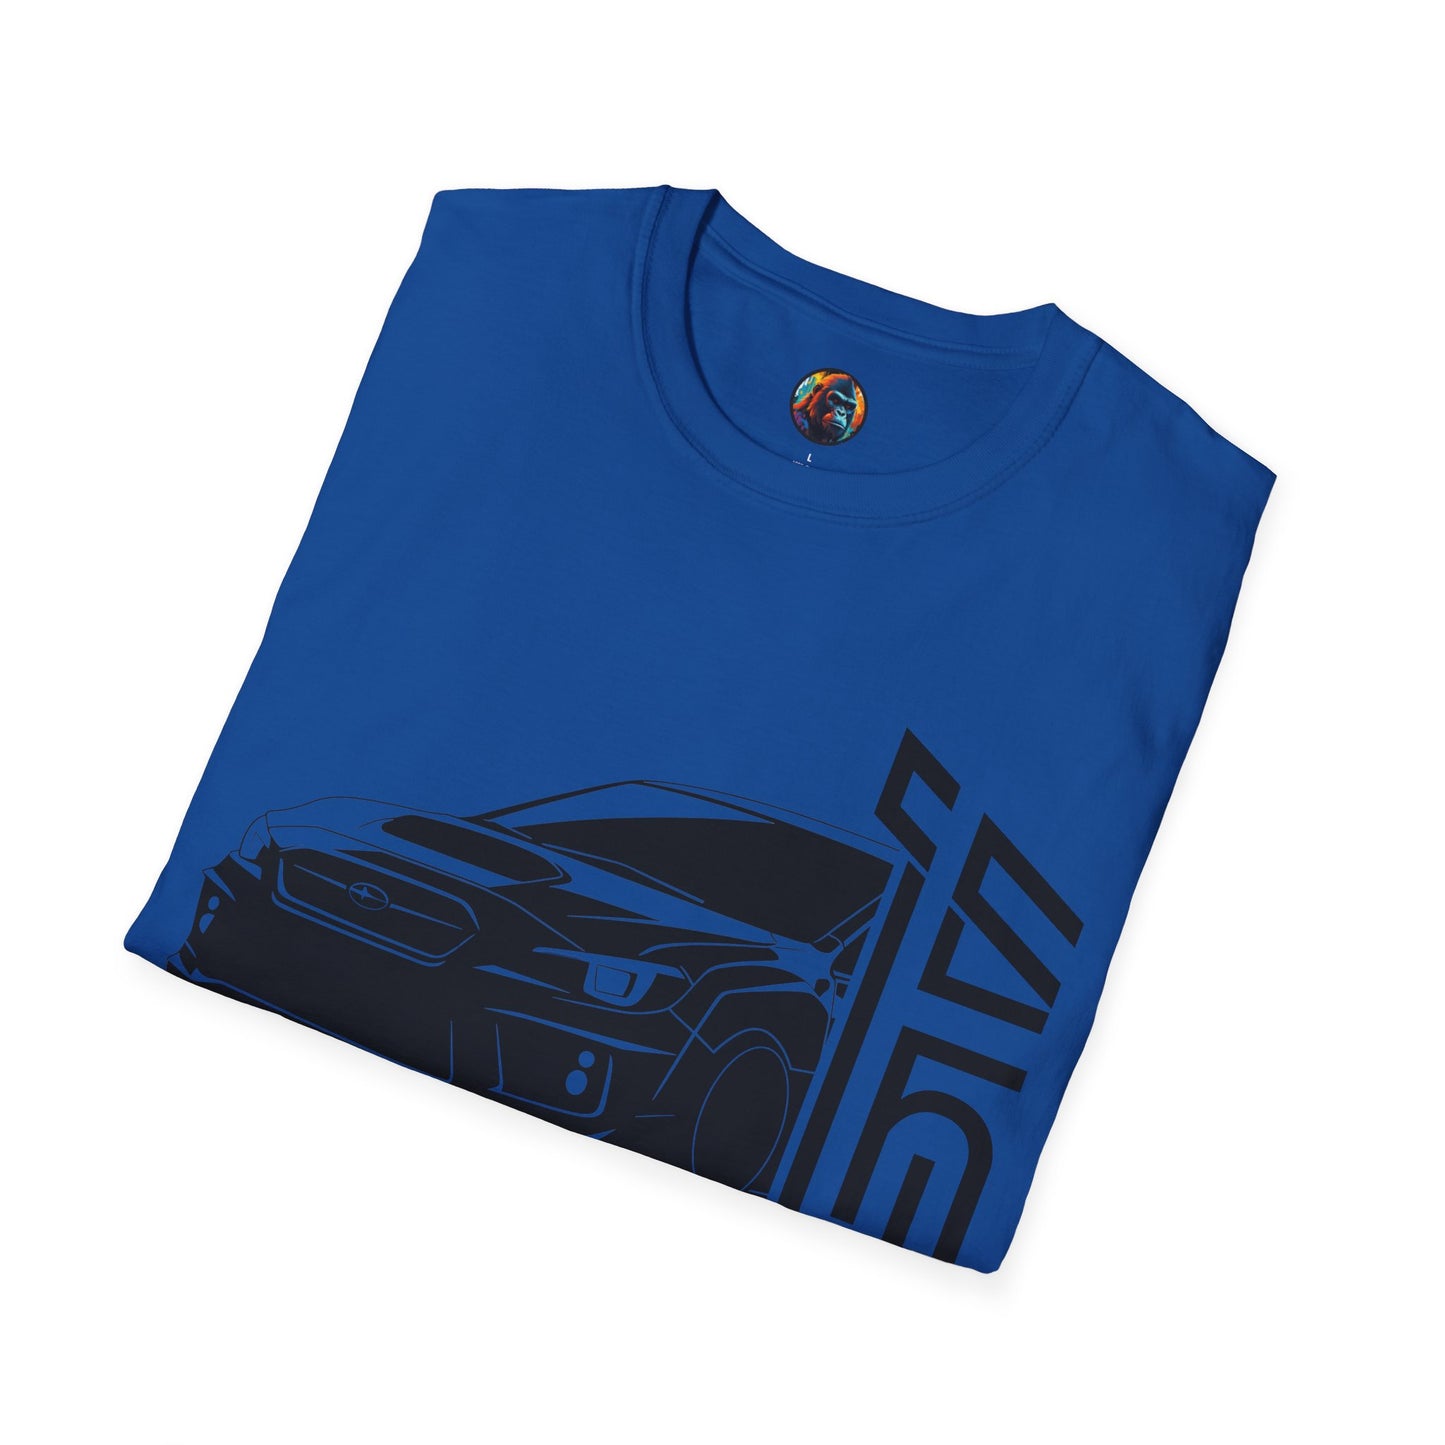 Subaru WRX STI Front End Big T-Shirt